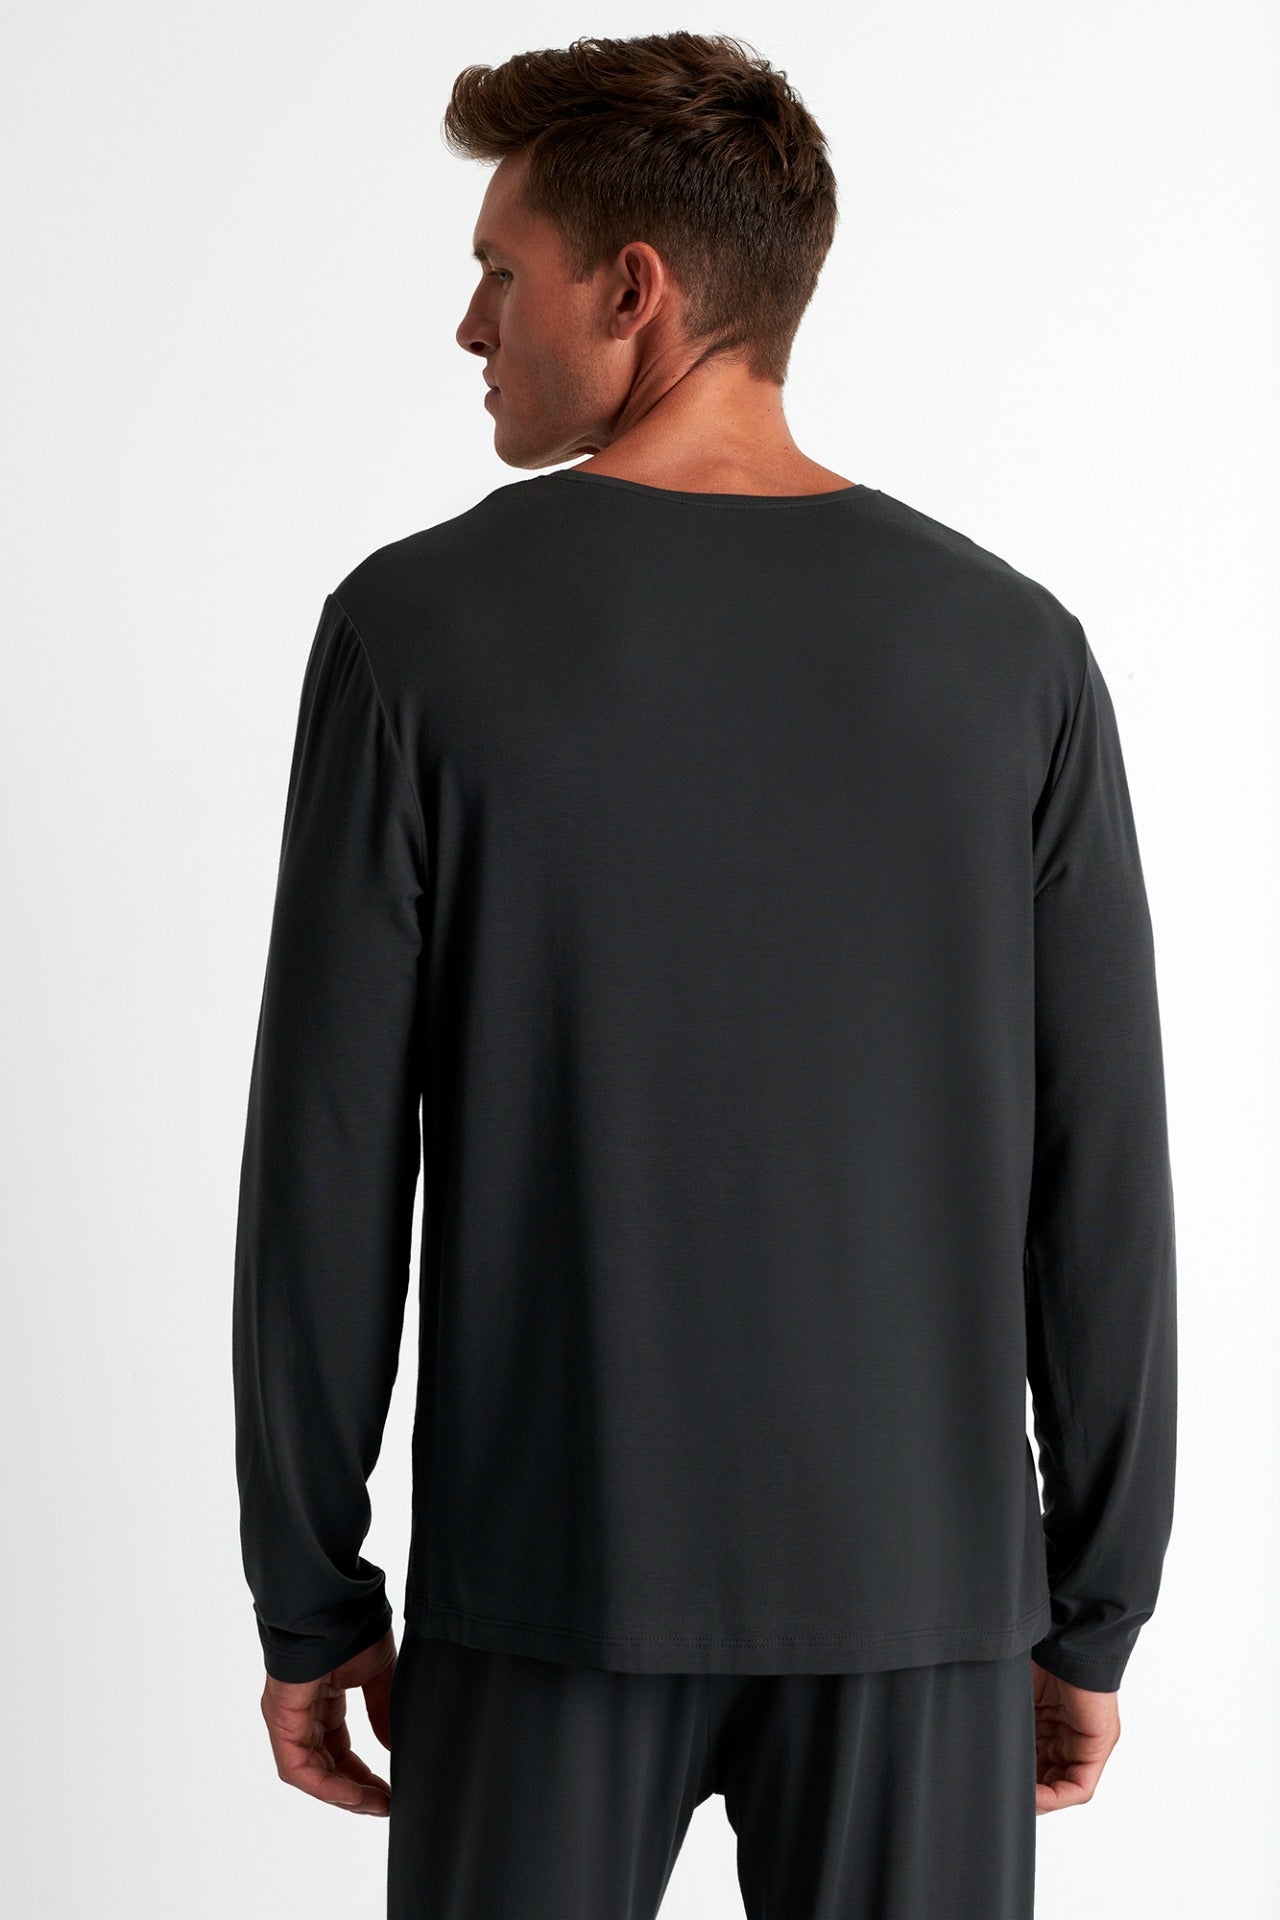 62294-82-170 - Soft Round Neck Long Sleeve Shirt S / 170 Titanium